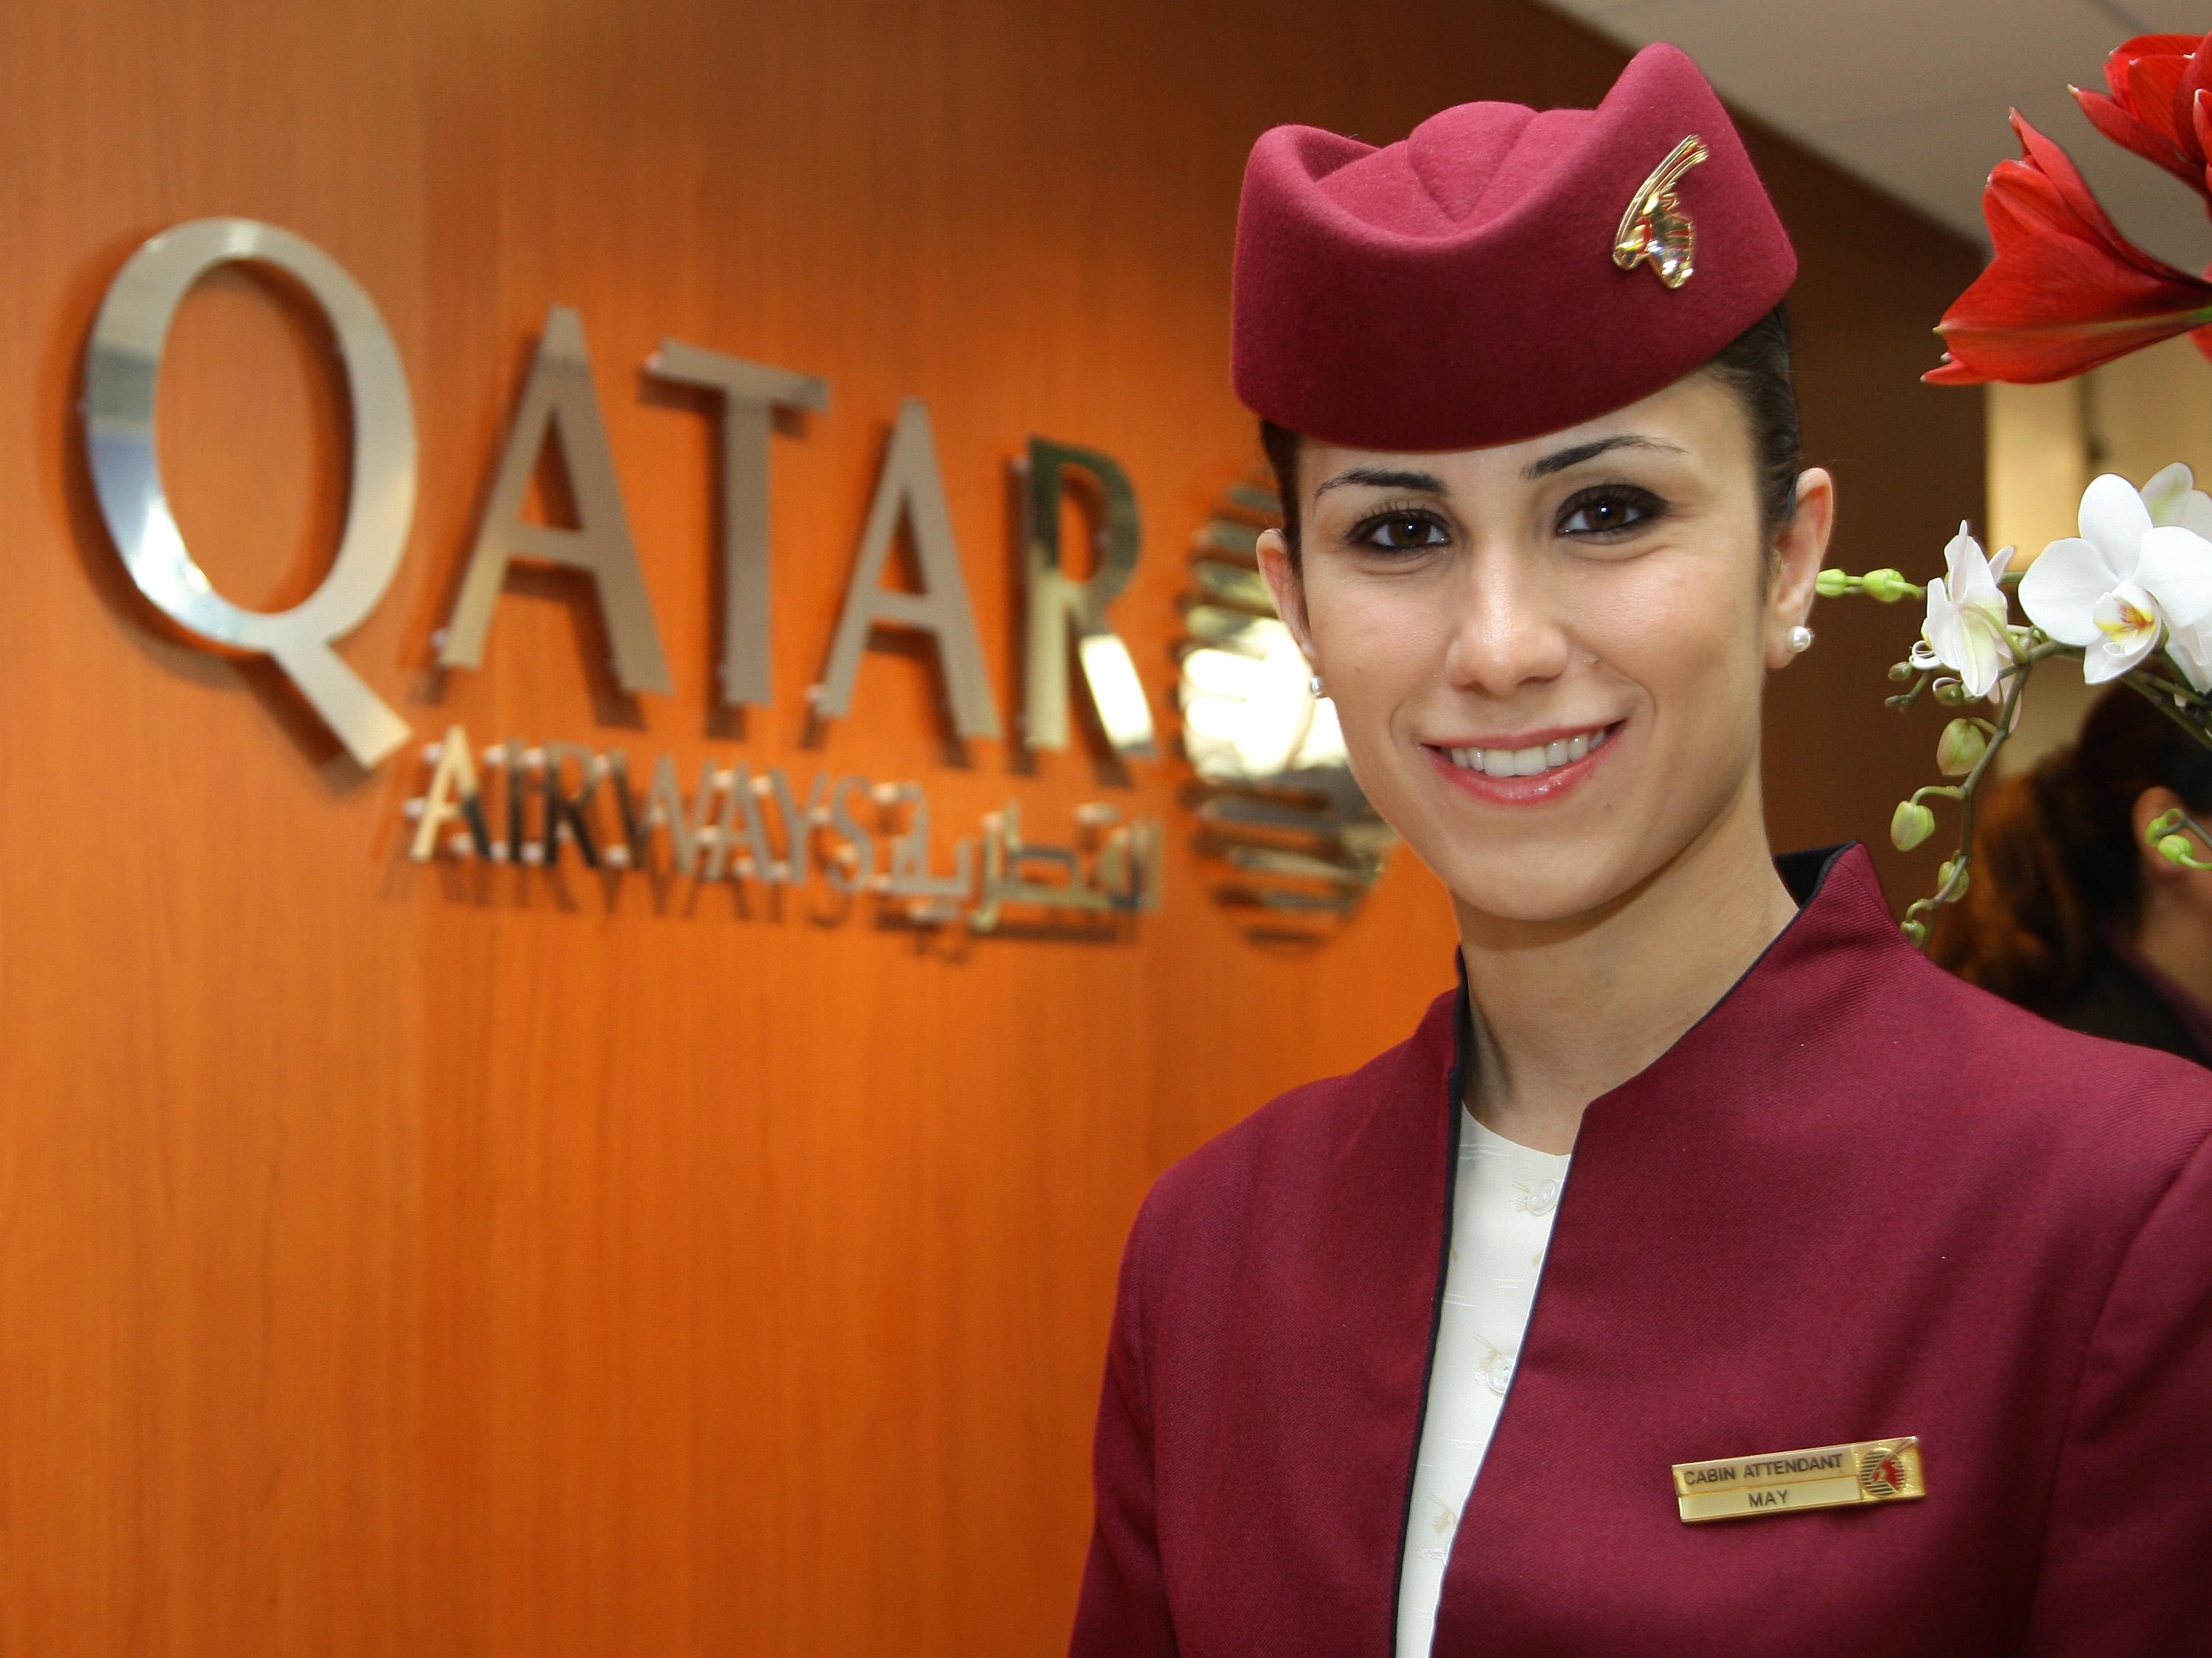 qatar airways' female flight attendant policies are